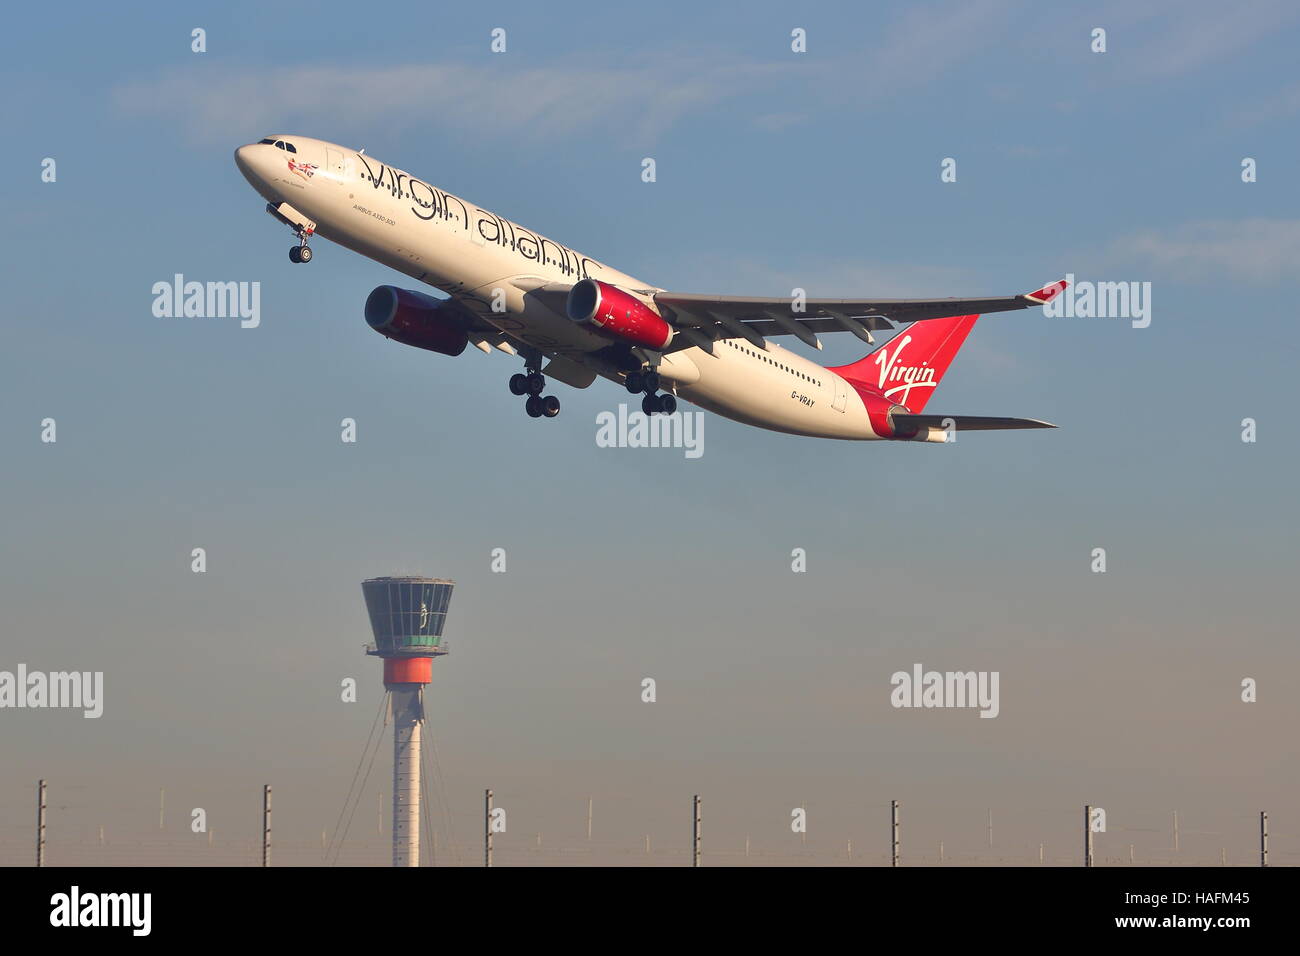 Virgin Atlantic Airbus 330-300 G-VRAY departing from London Heathrow Airport, UK Stock Photo